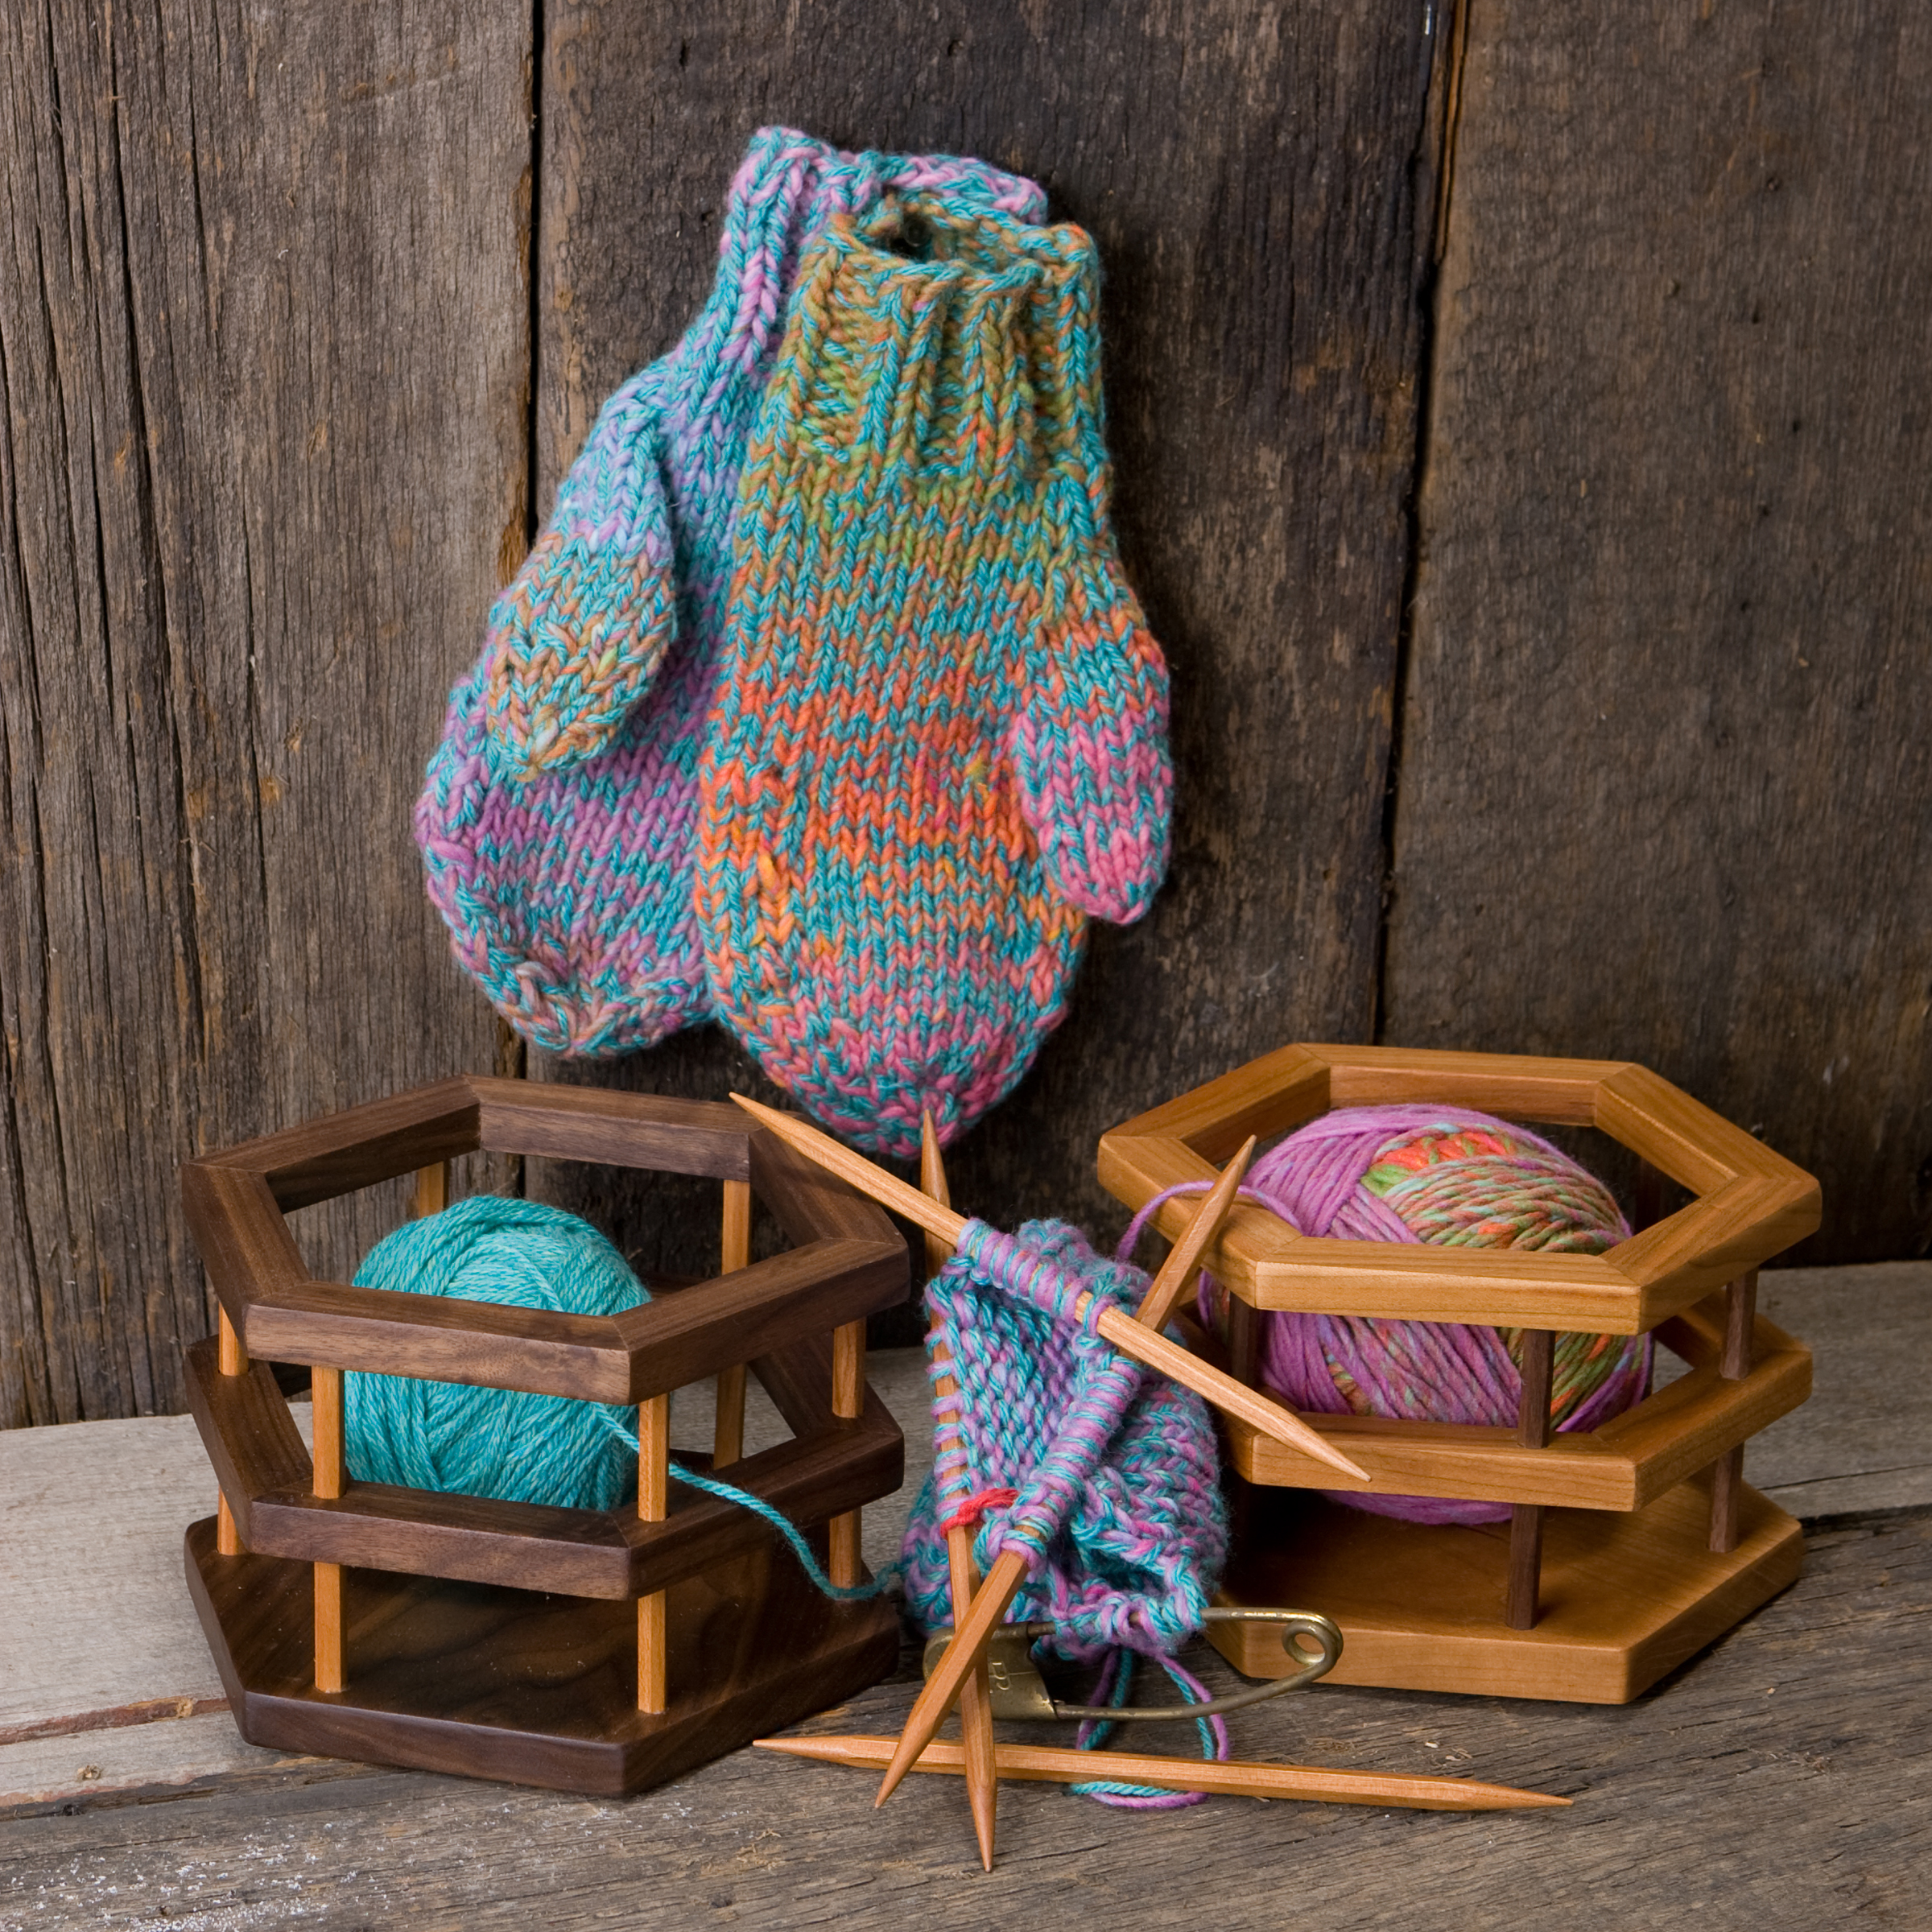 Bamboo Knitting Bowl,6.1x3.7 Inch Handmade Needlework Yarn Bowl Holder with  Removable Lid Holes,Wool Knitting Storage Bowl for DIY Crochet Knitting  Home Decor